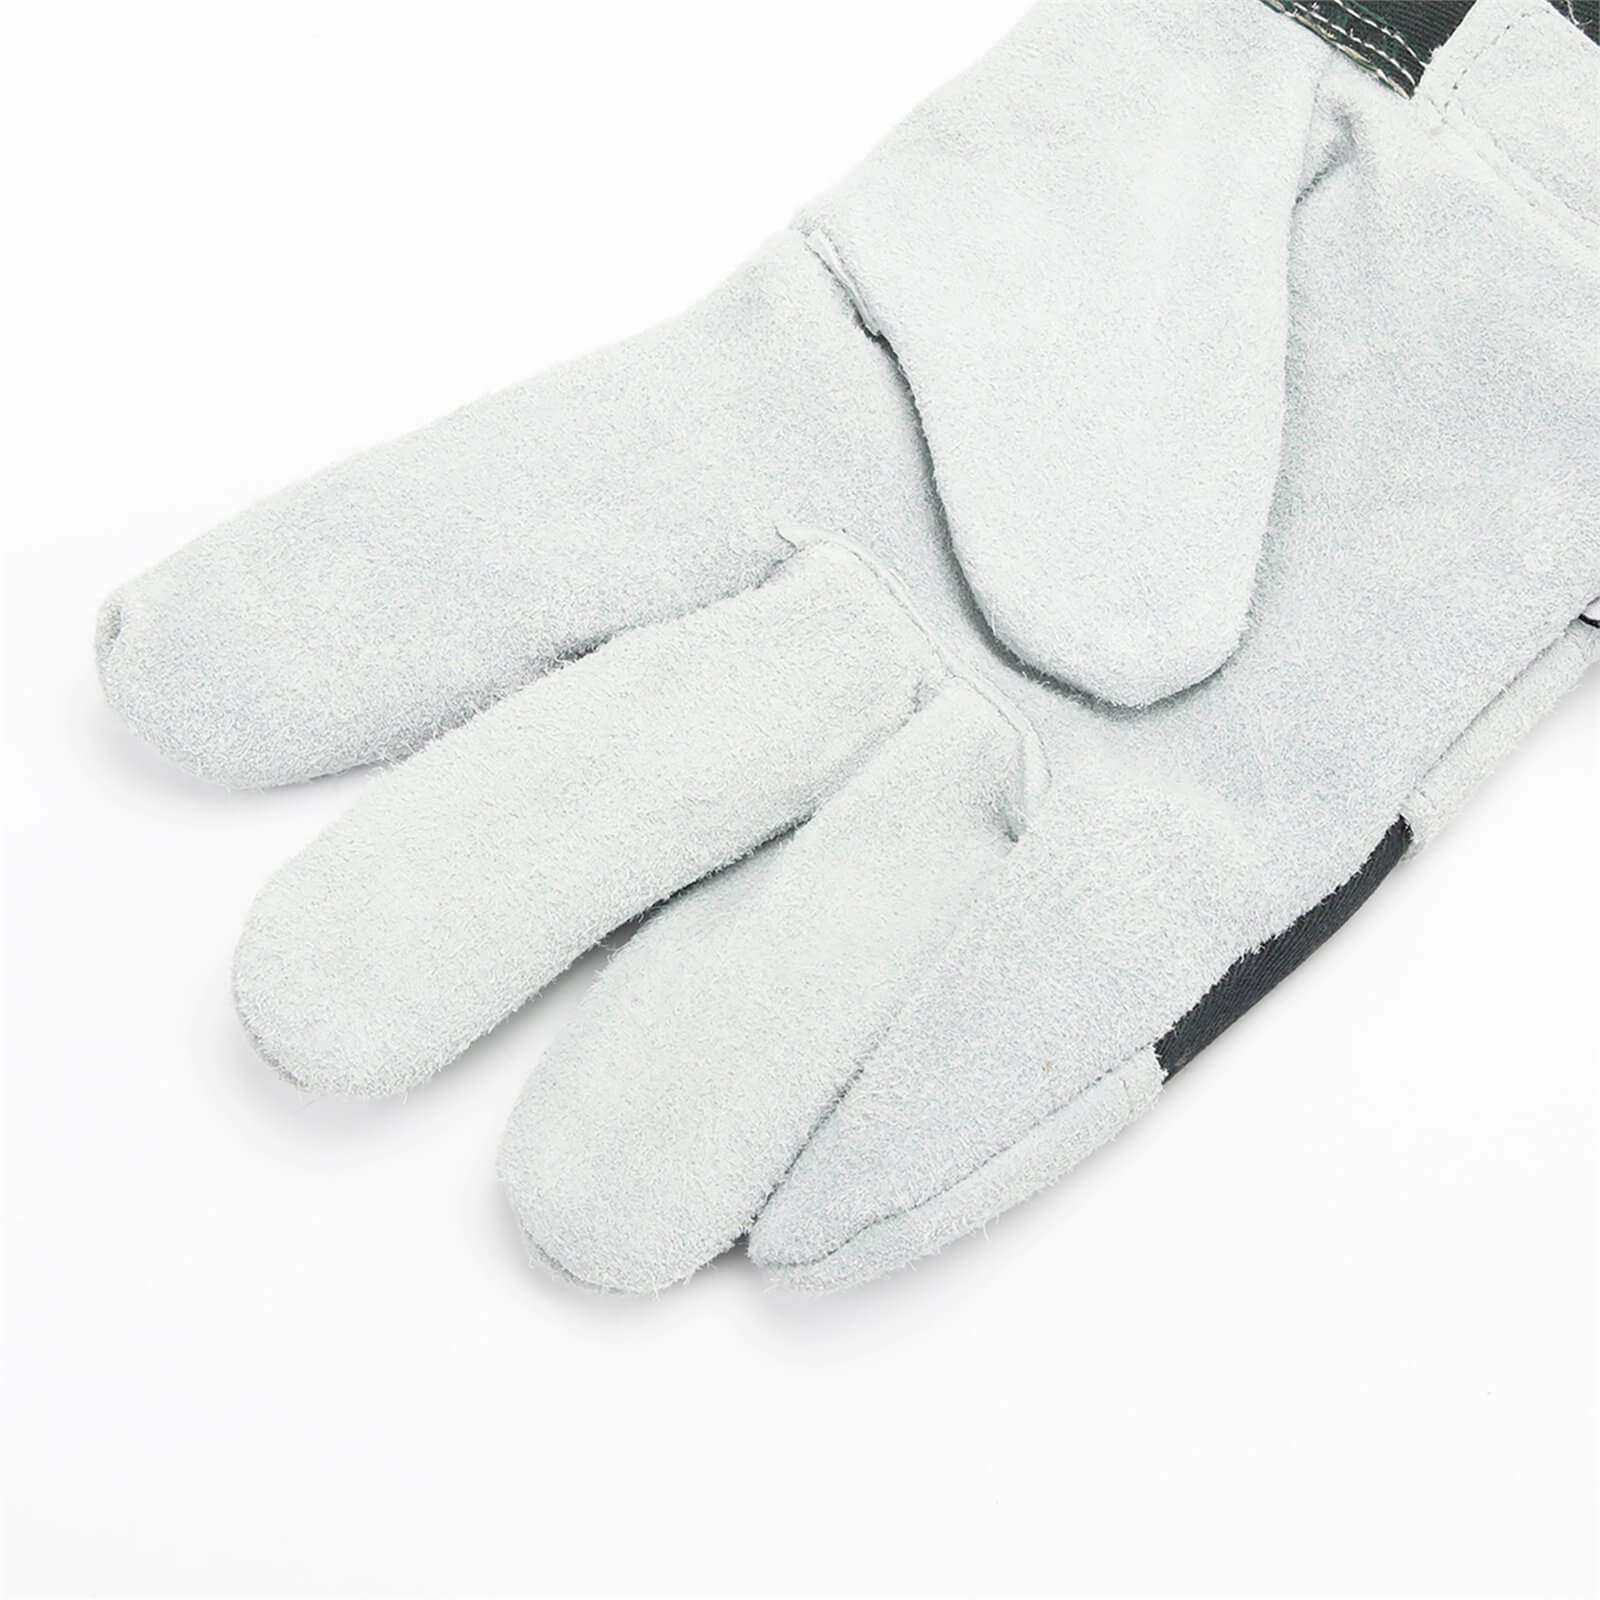 Homebase Classic Rigger Gloves - Large